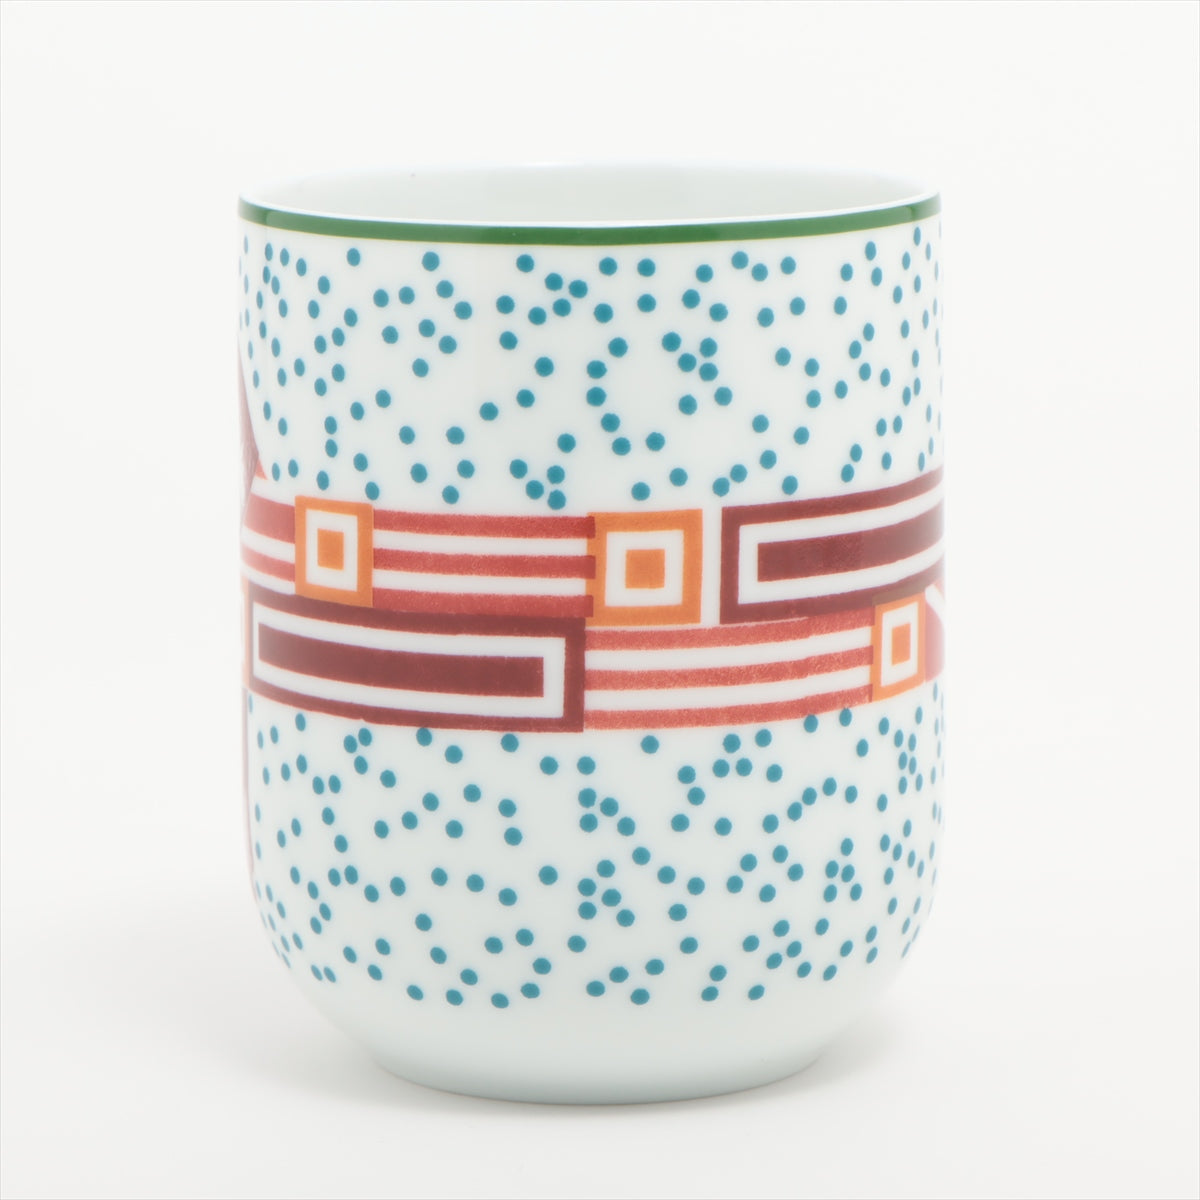 Hermès ipomovir Mug cup Ceramic Multicolor